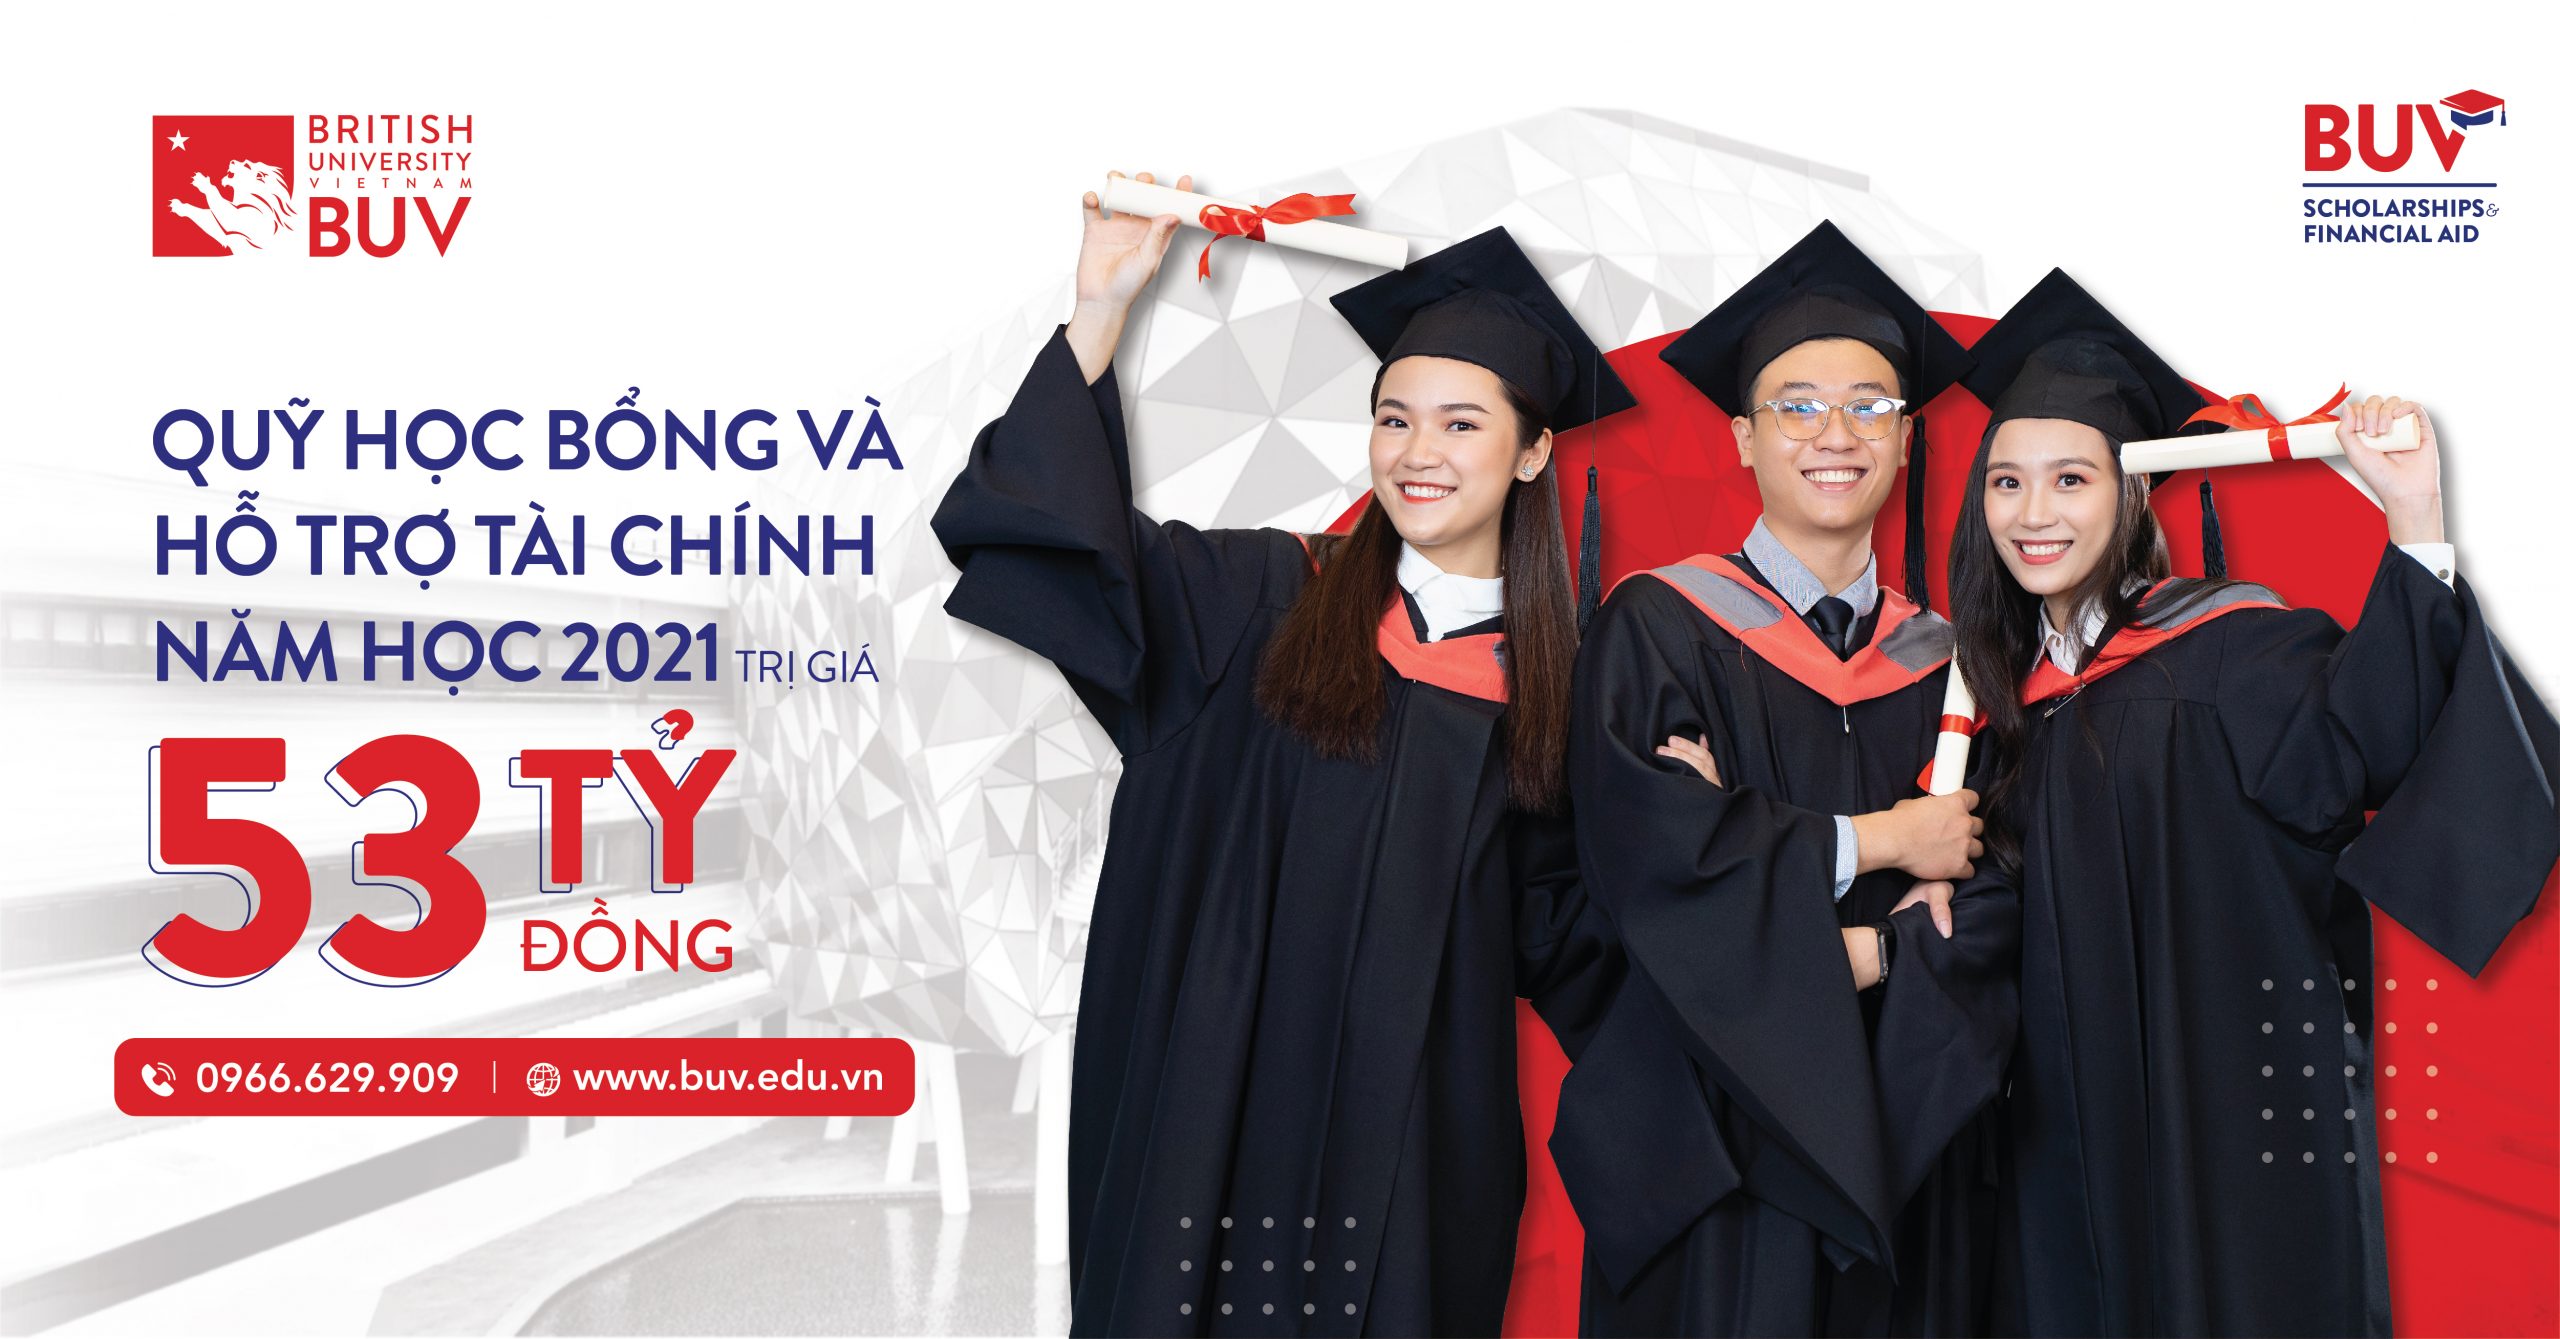 British University Vietnam launches scholarship fund of 53 billion VND for school year 2021